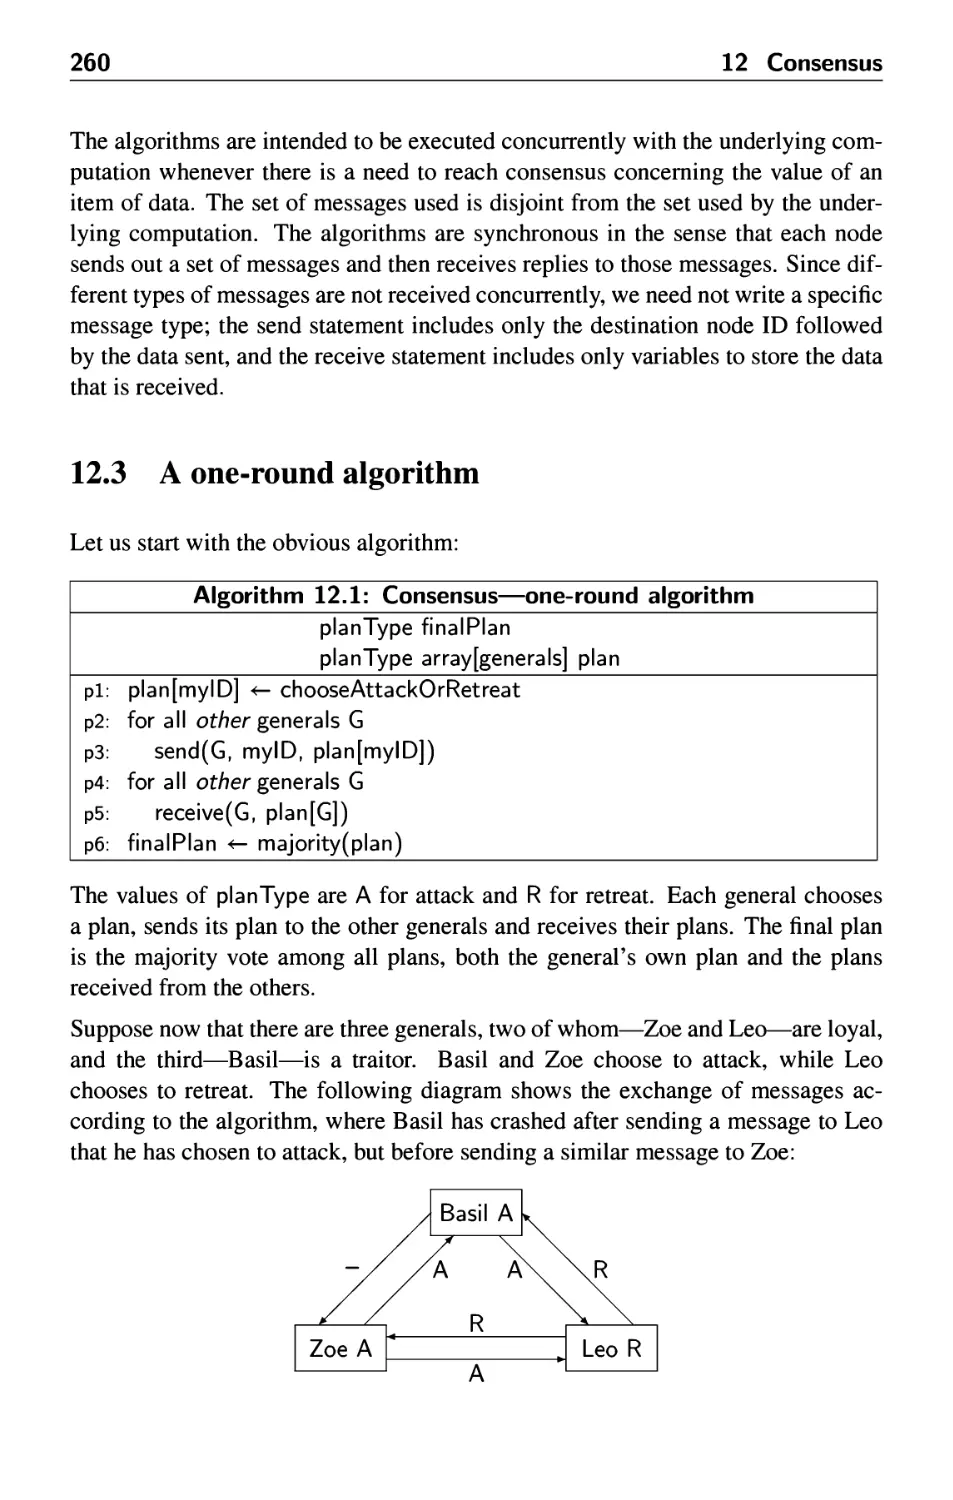 12.3 A one-round algorithm